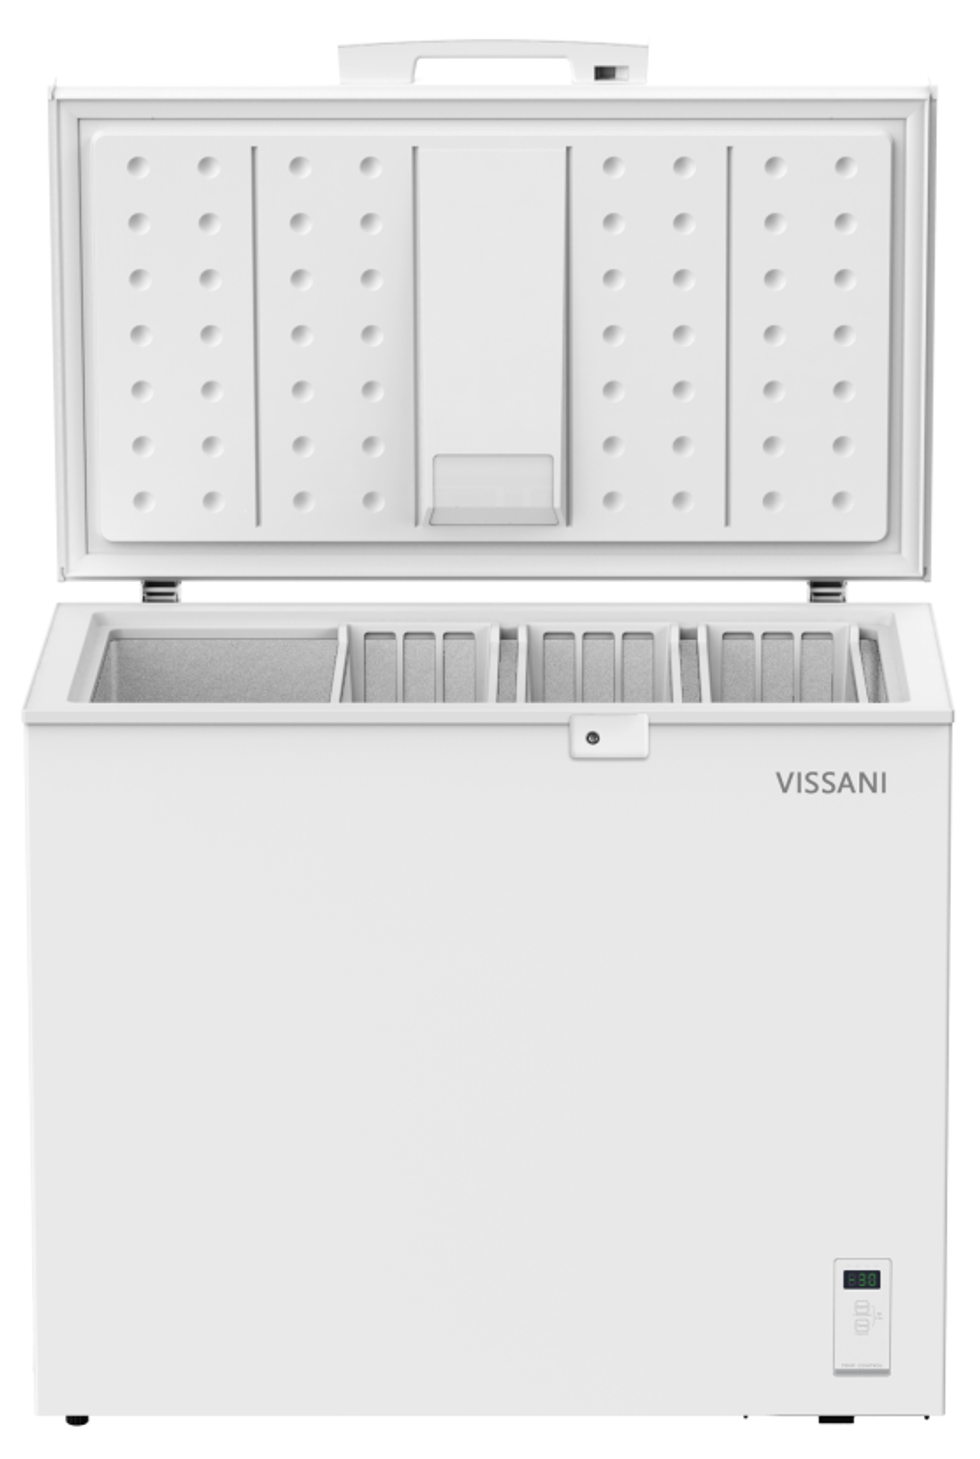 product shot of Vissanni 8.8 cu ft. Smart Chest Freezer